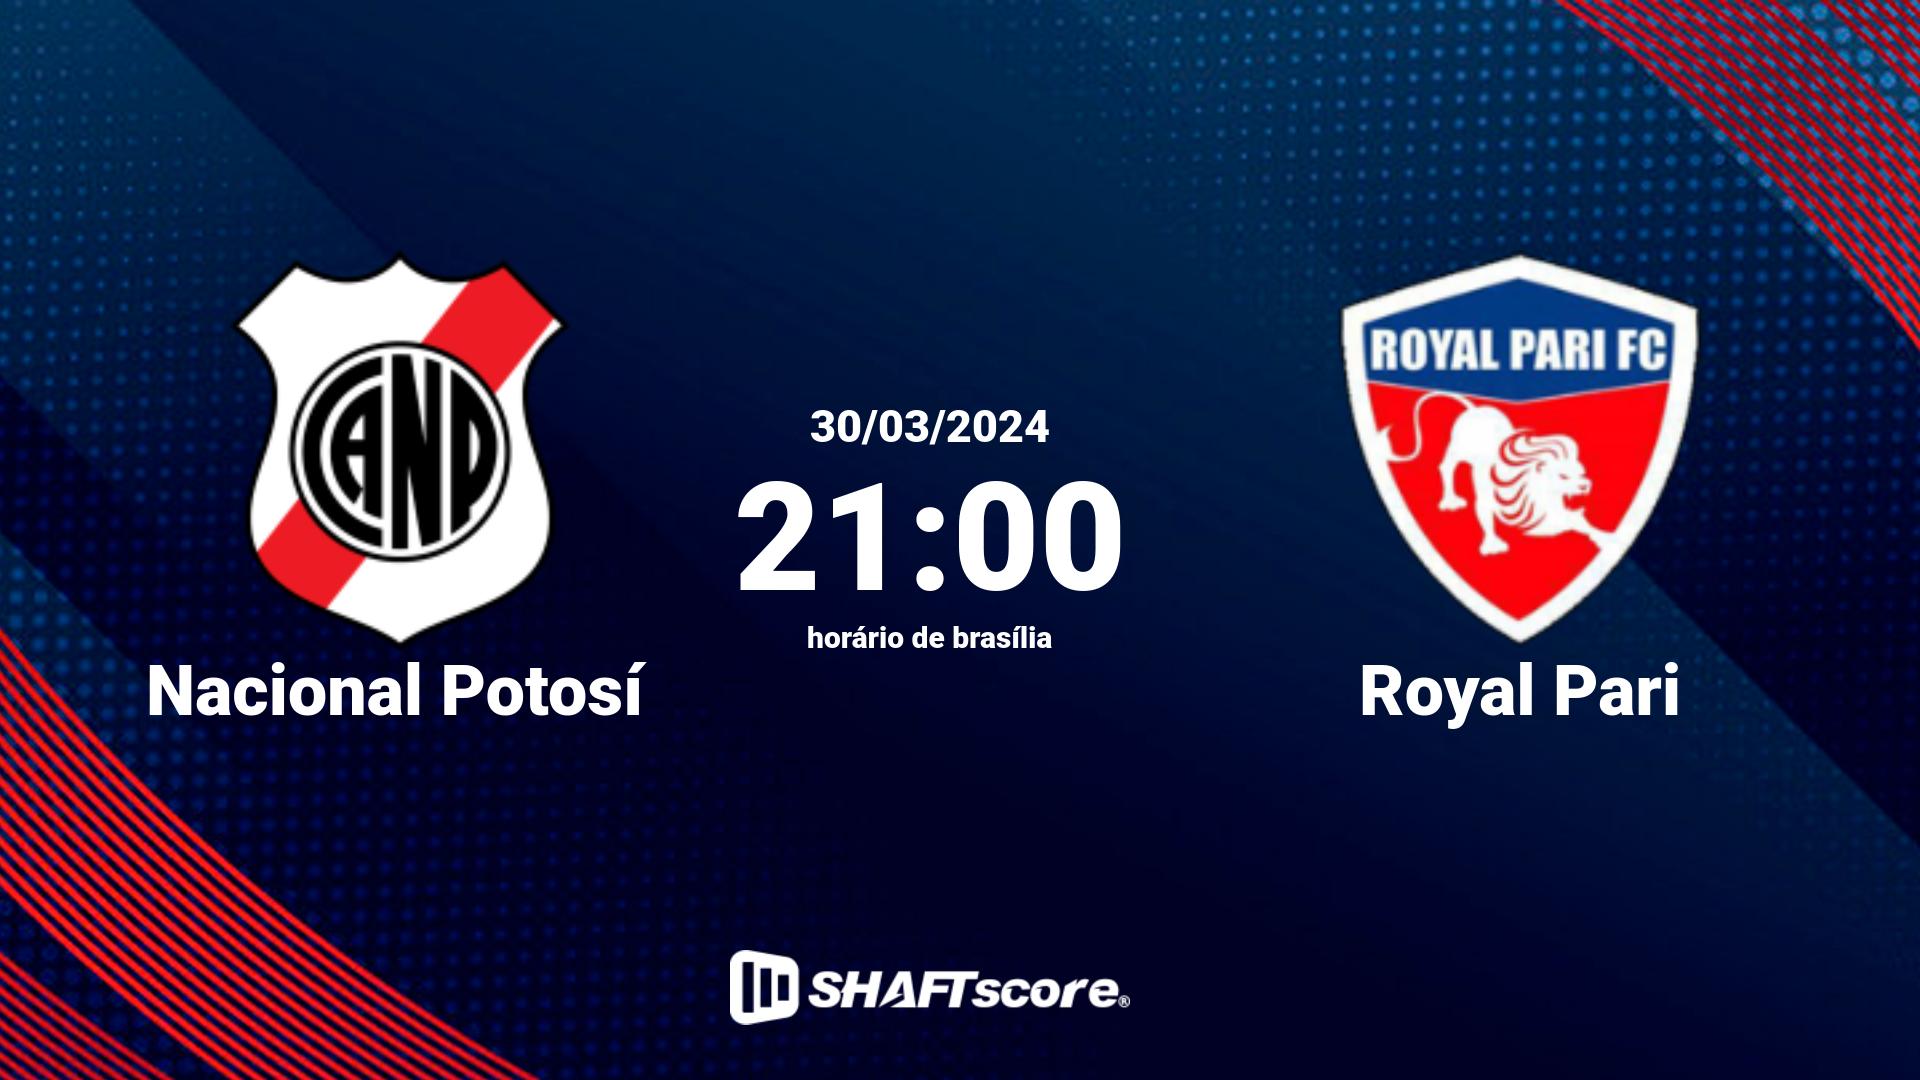 Estatísticas do jogo Nacional Potosí vs Royal Pari 30.03 21:00